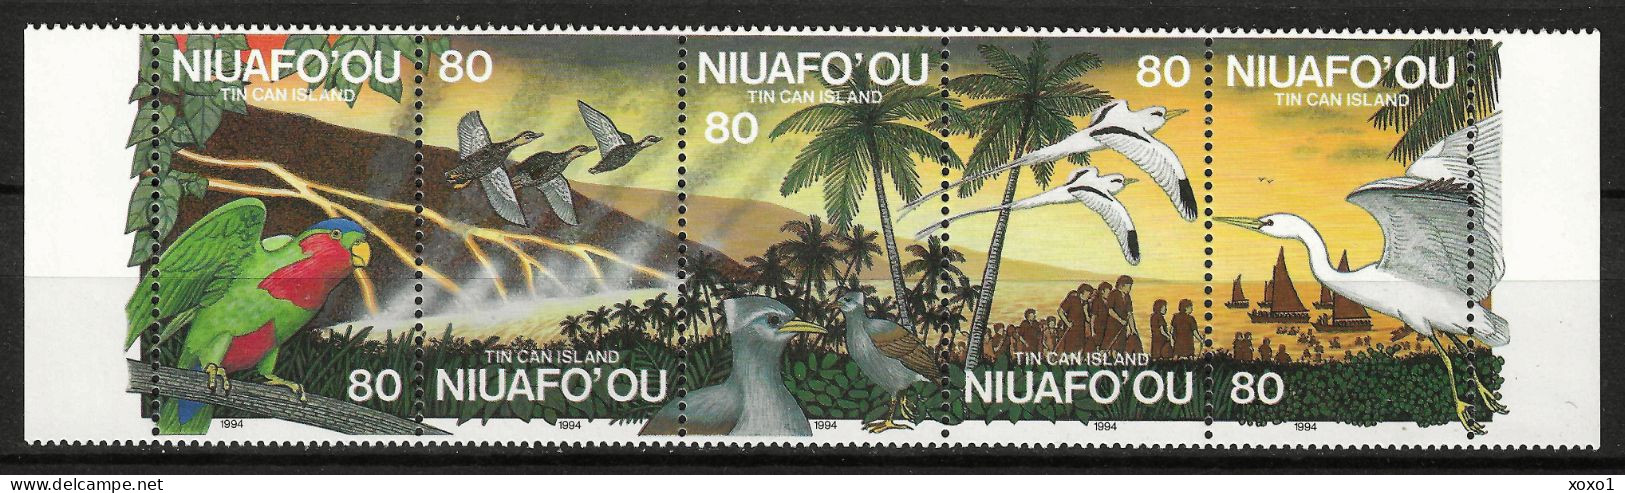 Niuafo'Ou 1994 MiNr. 269 - 273 Niuafo'ou-Insel Geology, Volcanos, Volcanic Eruption, Birds  5v MNH** 14,00 € - Vulkanen